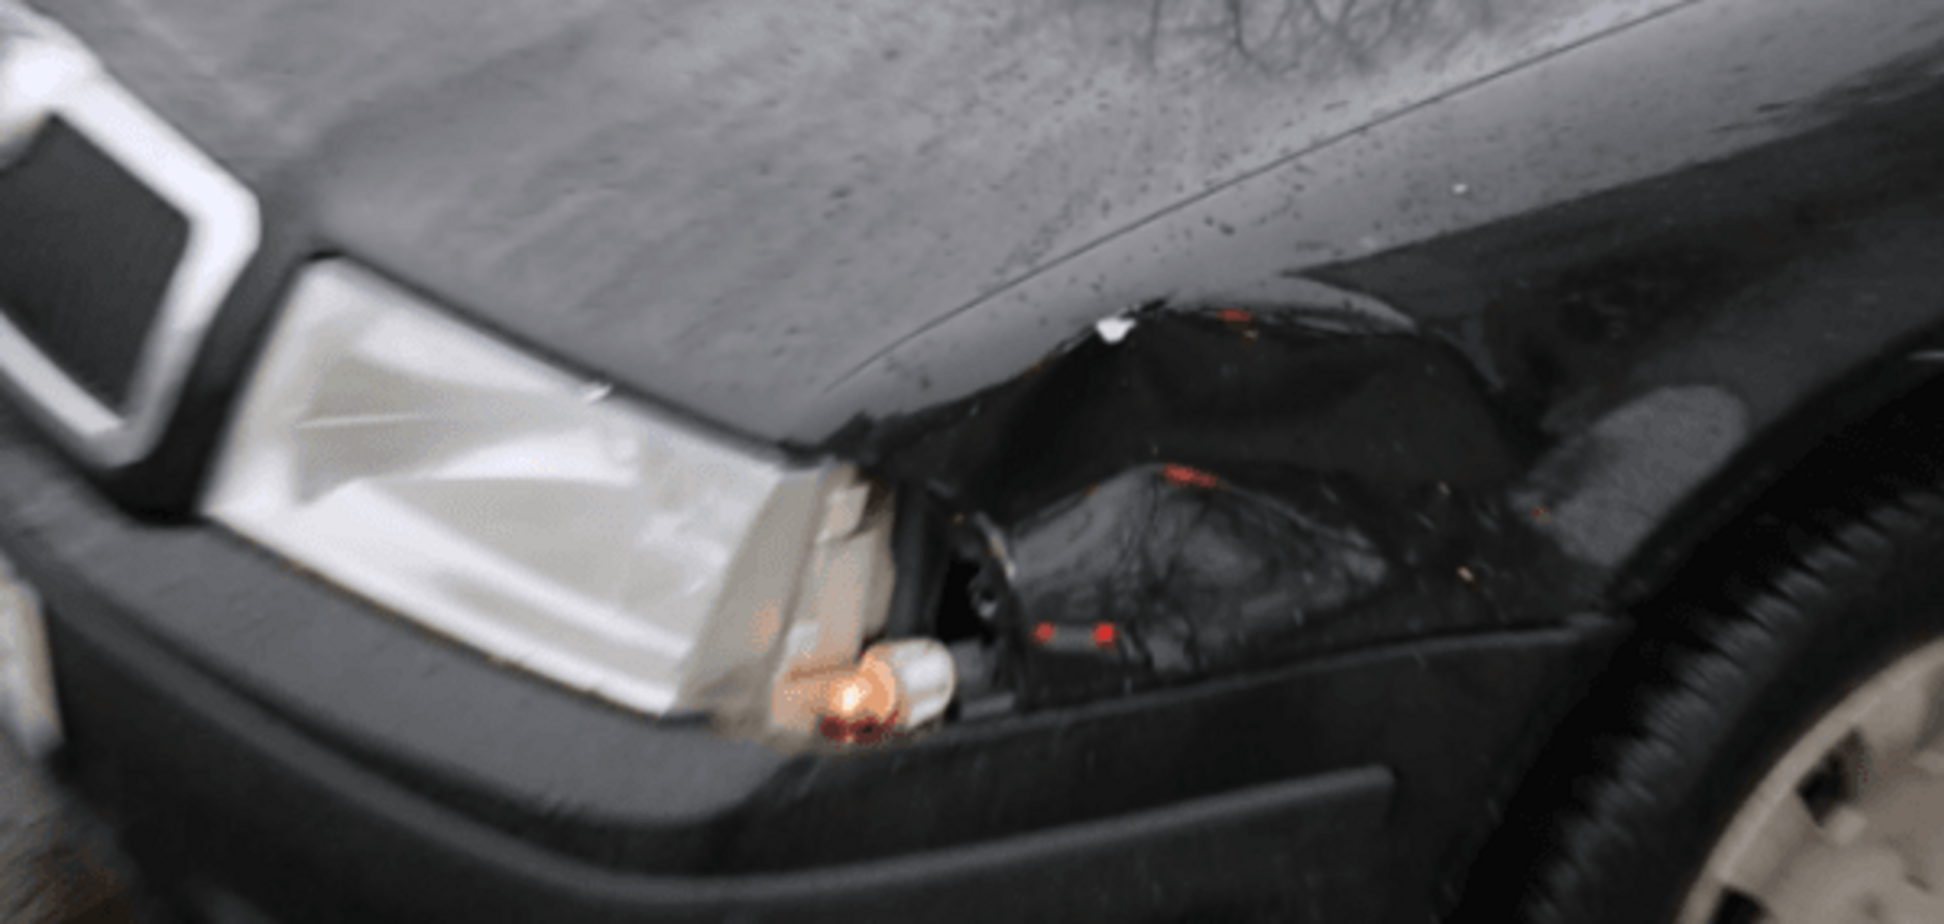 В Полтаве авто с нардепом сбило ребенка: фото и видео ДТП